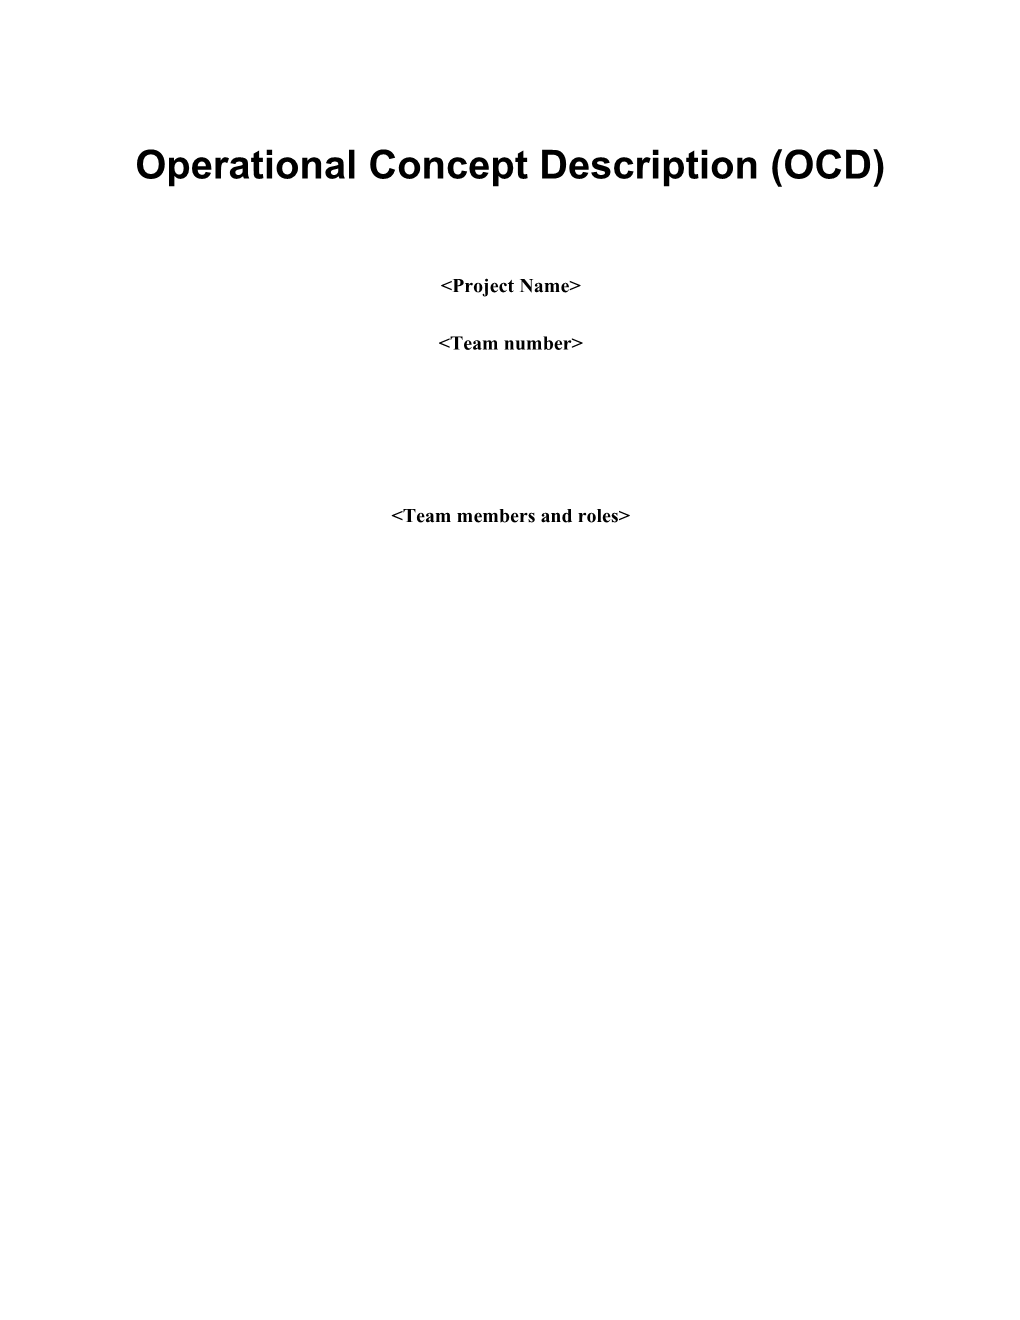 Operational Concept Description (OCD) s19